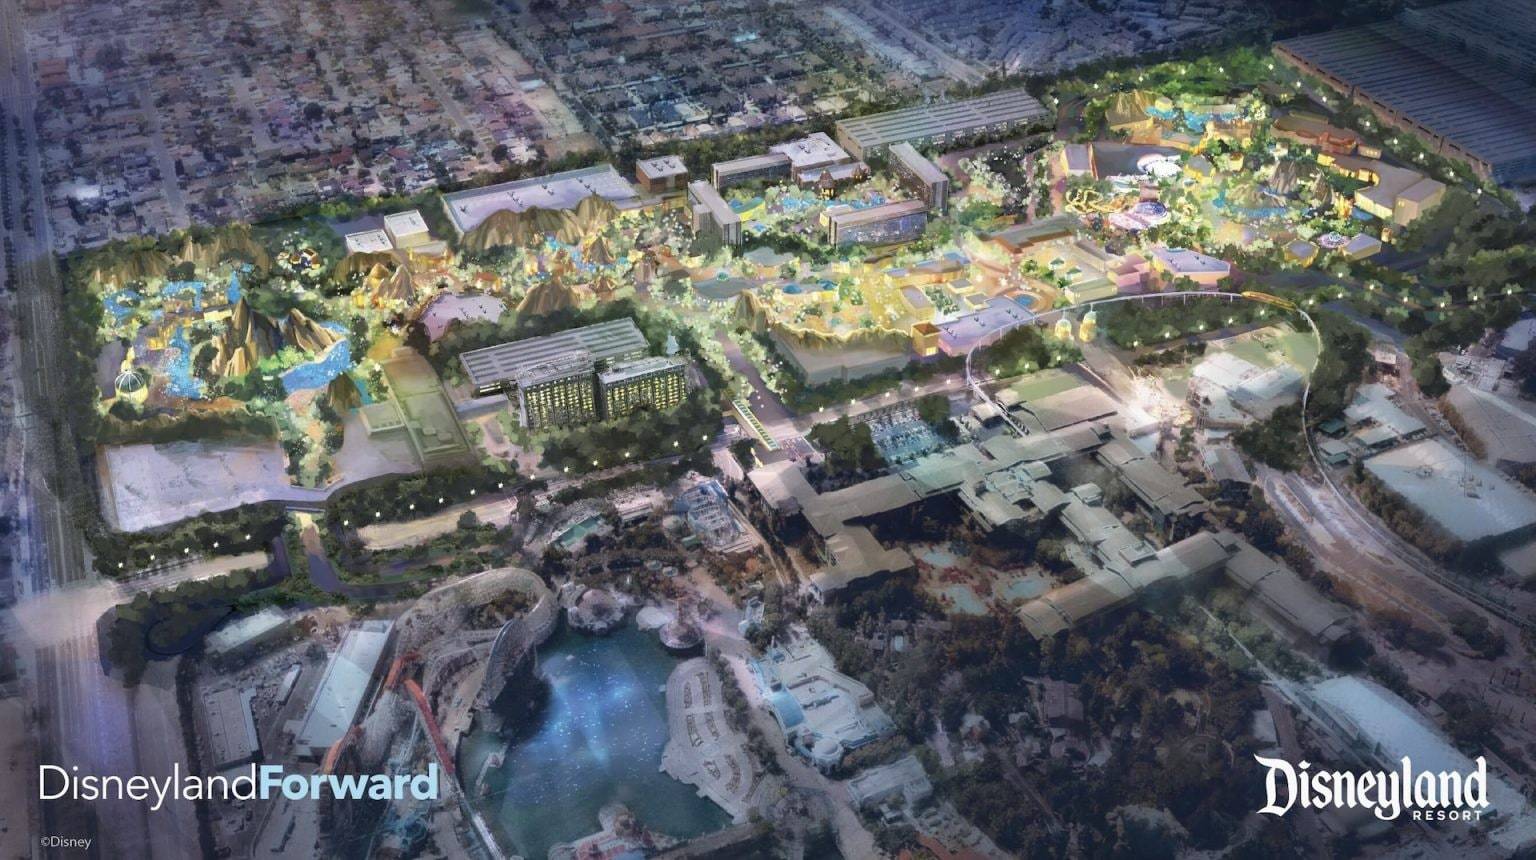 Anaheim Approves DisneylandForward, Paving Way for Resort Expansion 